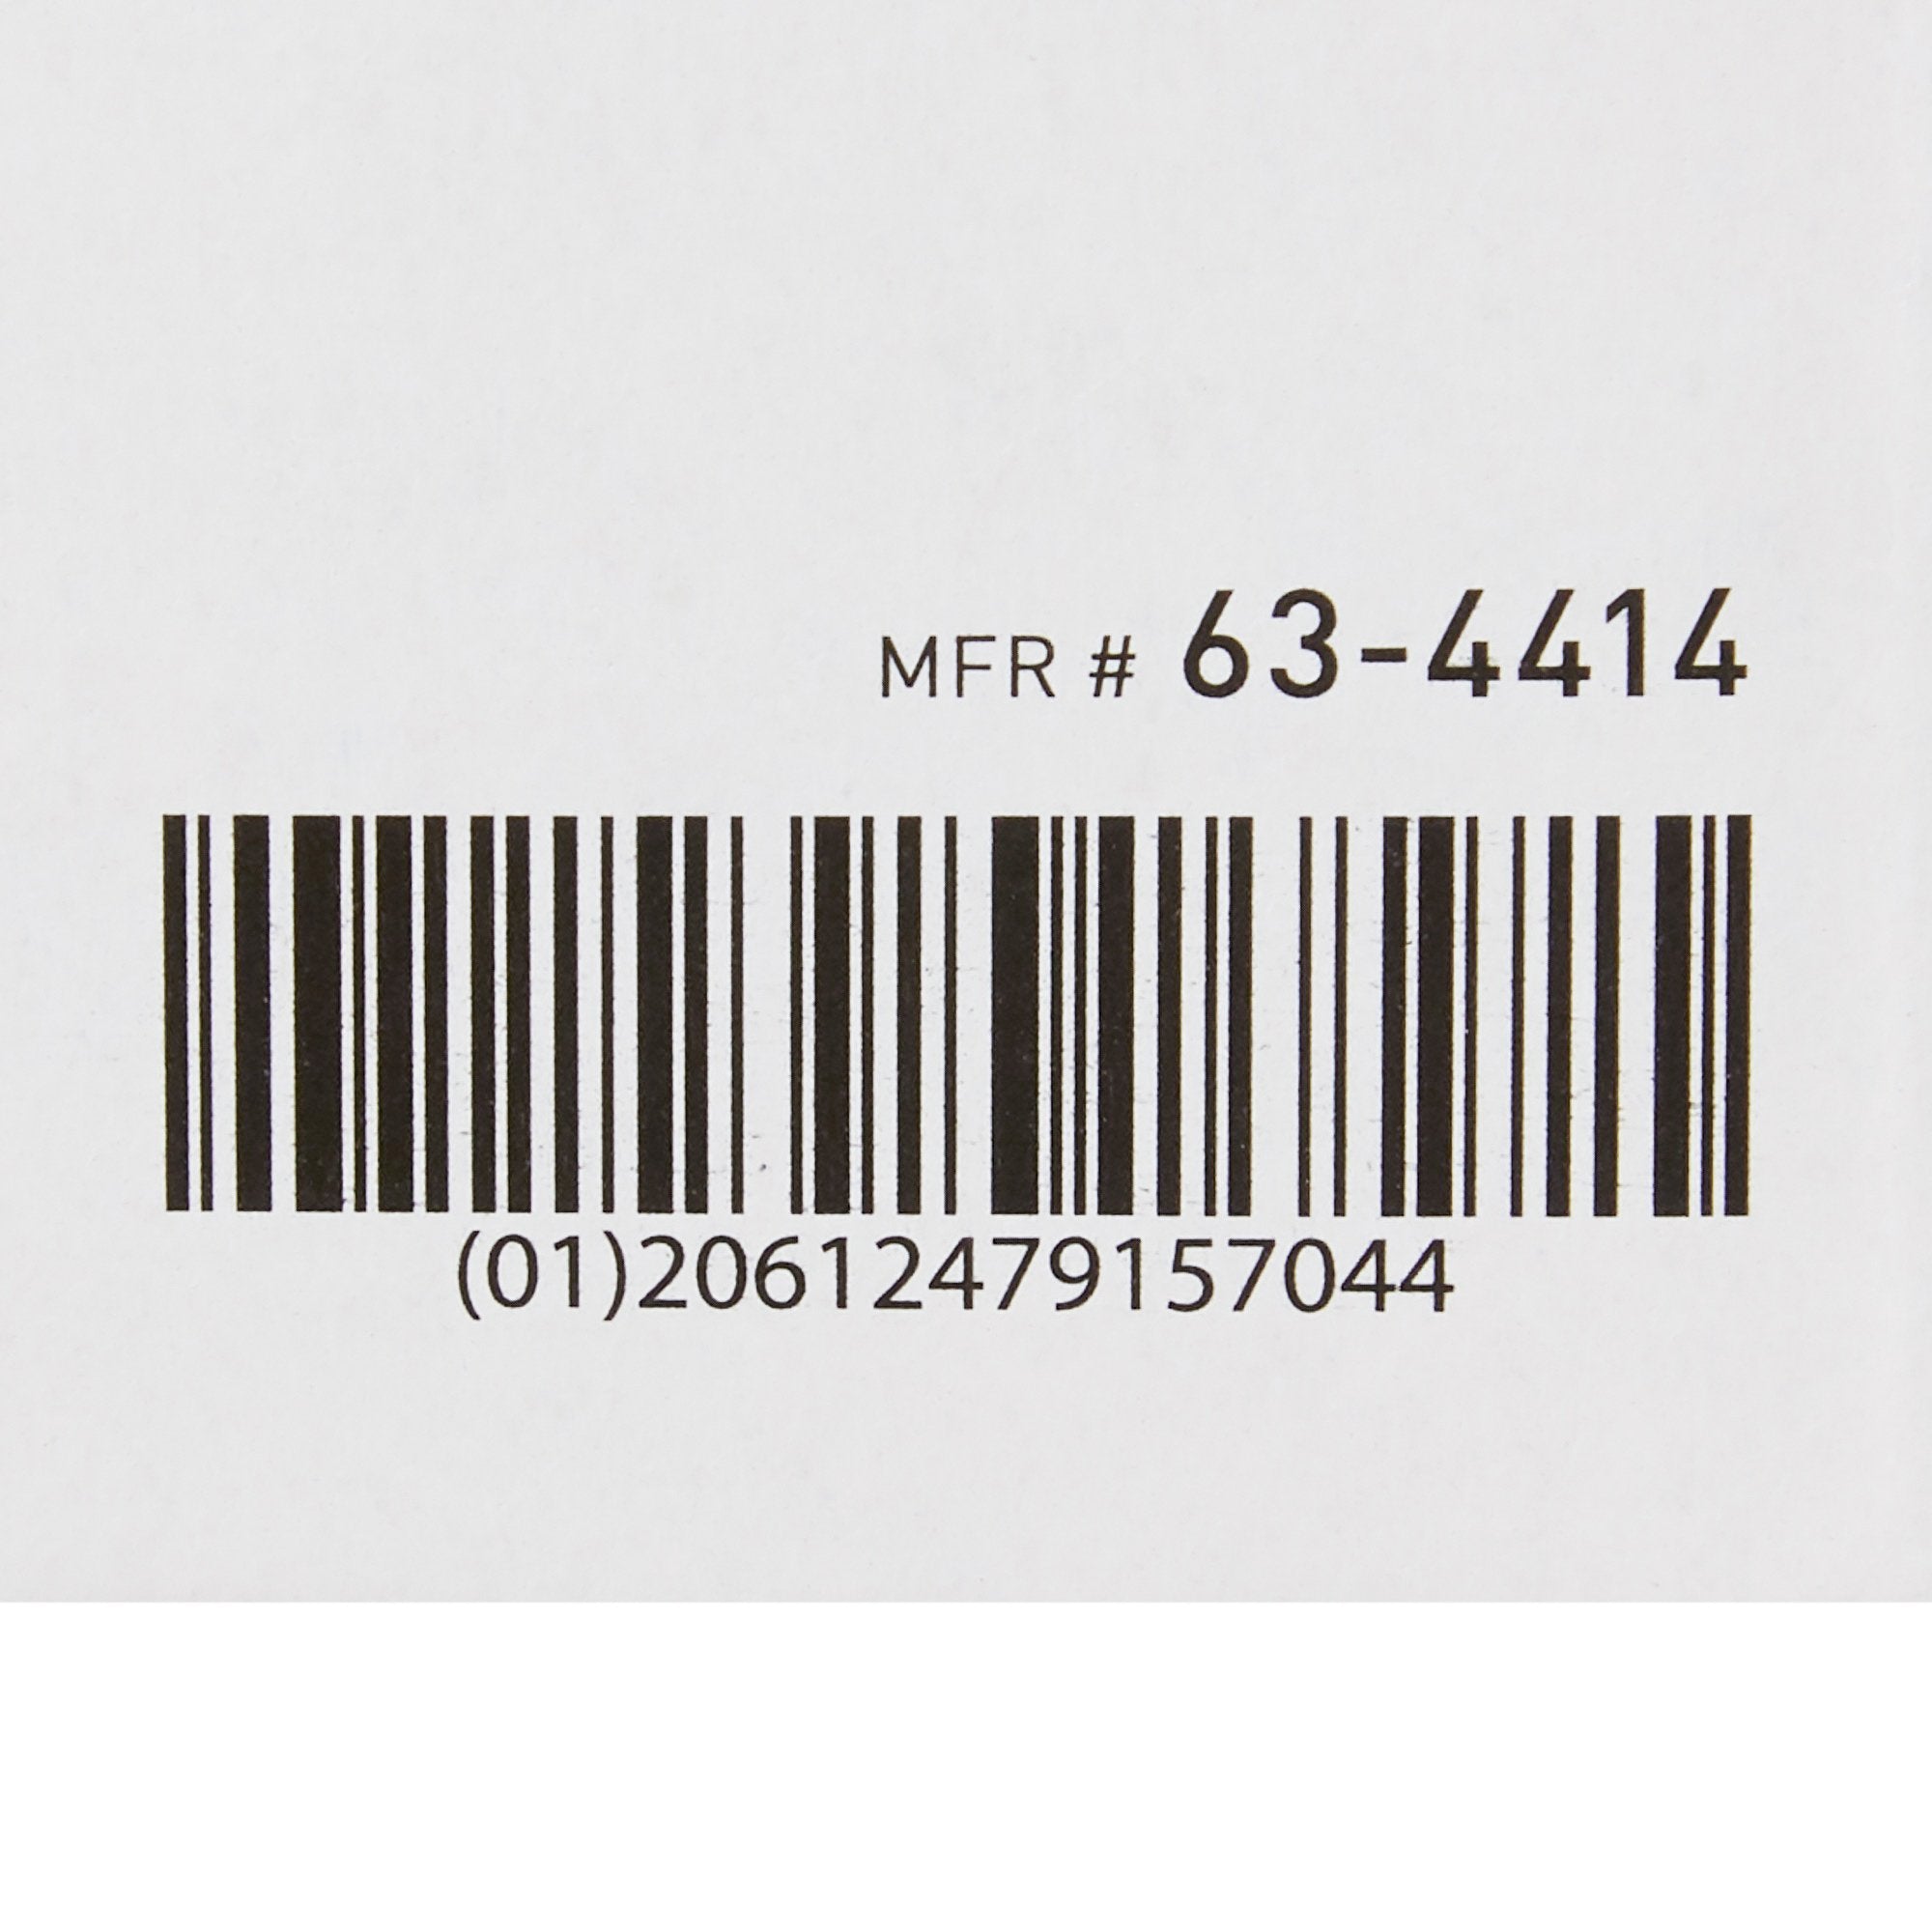 63-4414 McKesson CLOTH TAPE MEASURE (6 PER BOX) : PartsSource : PartsSource  - Healthcare Products and Solutions